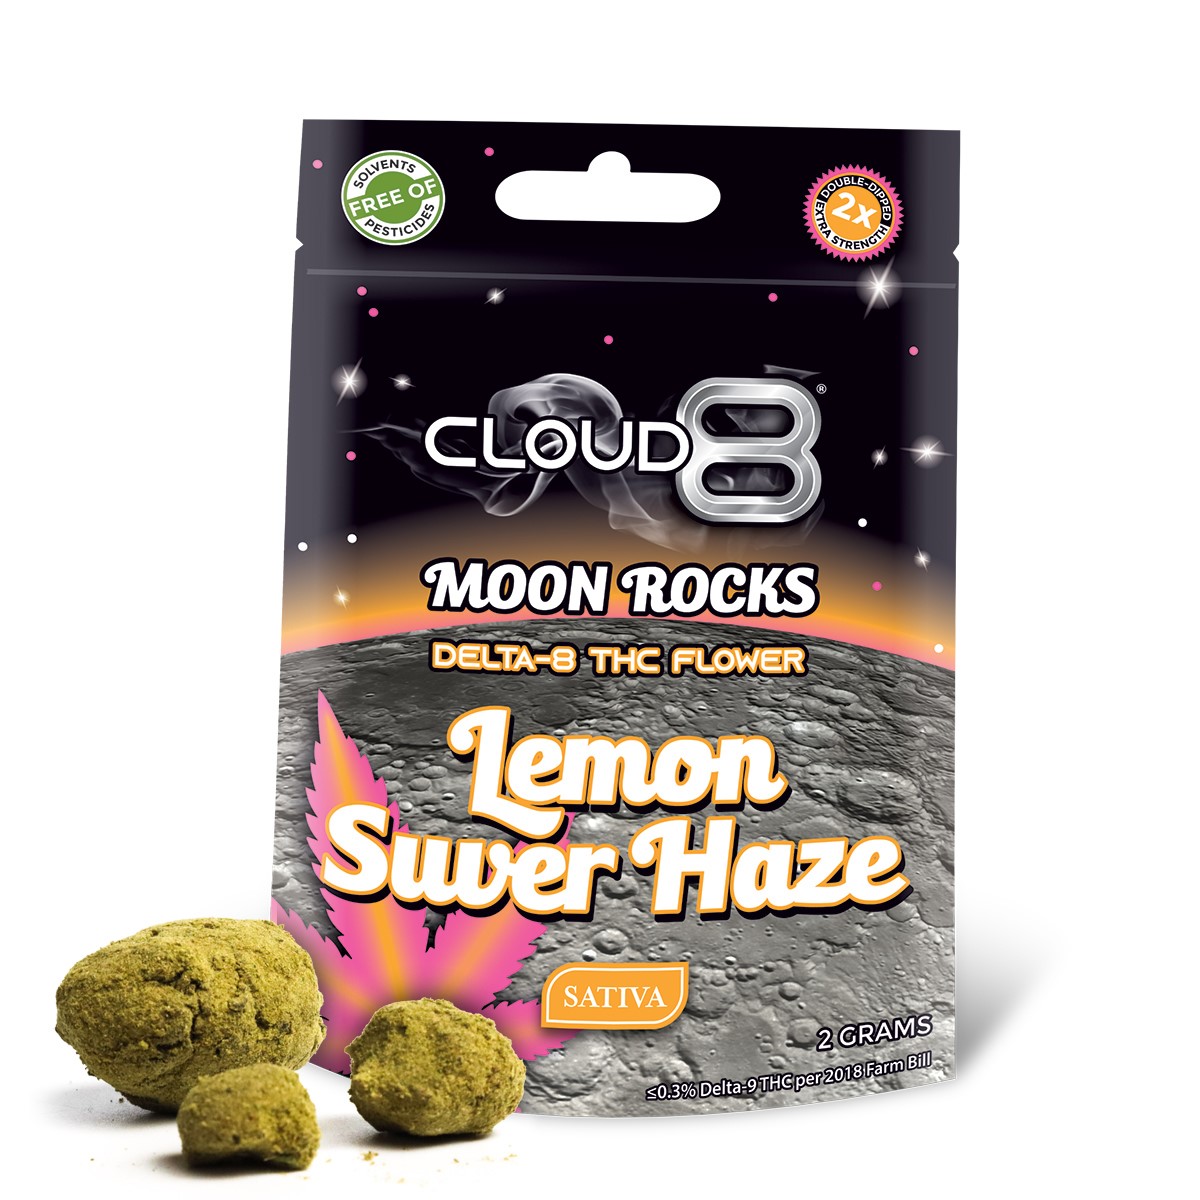 🍋✨ Unleash the zesty taste of Lemon Suver Haze Cloud 8 Delta 8 Moon Rocks! 🍋✨

cloud8delta8.com/products/b1750…

#cloud8
#delta8
#sativa 
#Sales 
#FridayVibes 
#weekenddiscount 
#CannabisCommunity